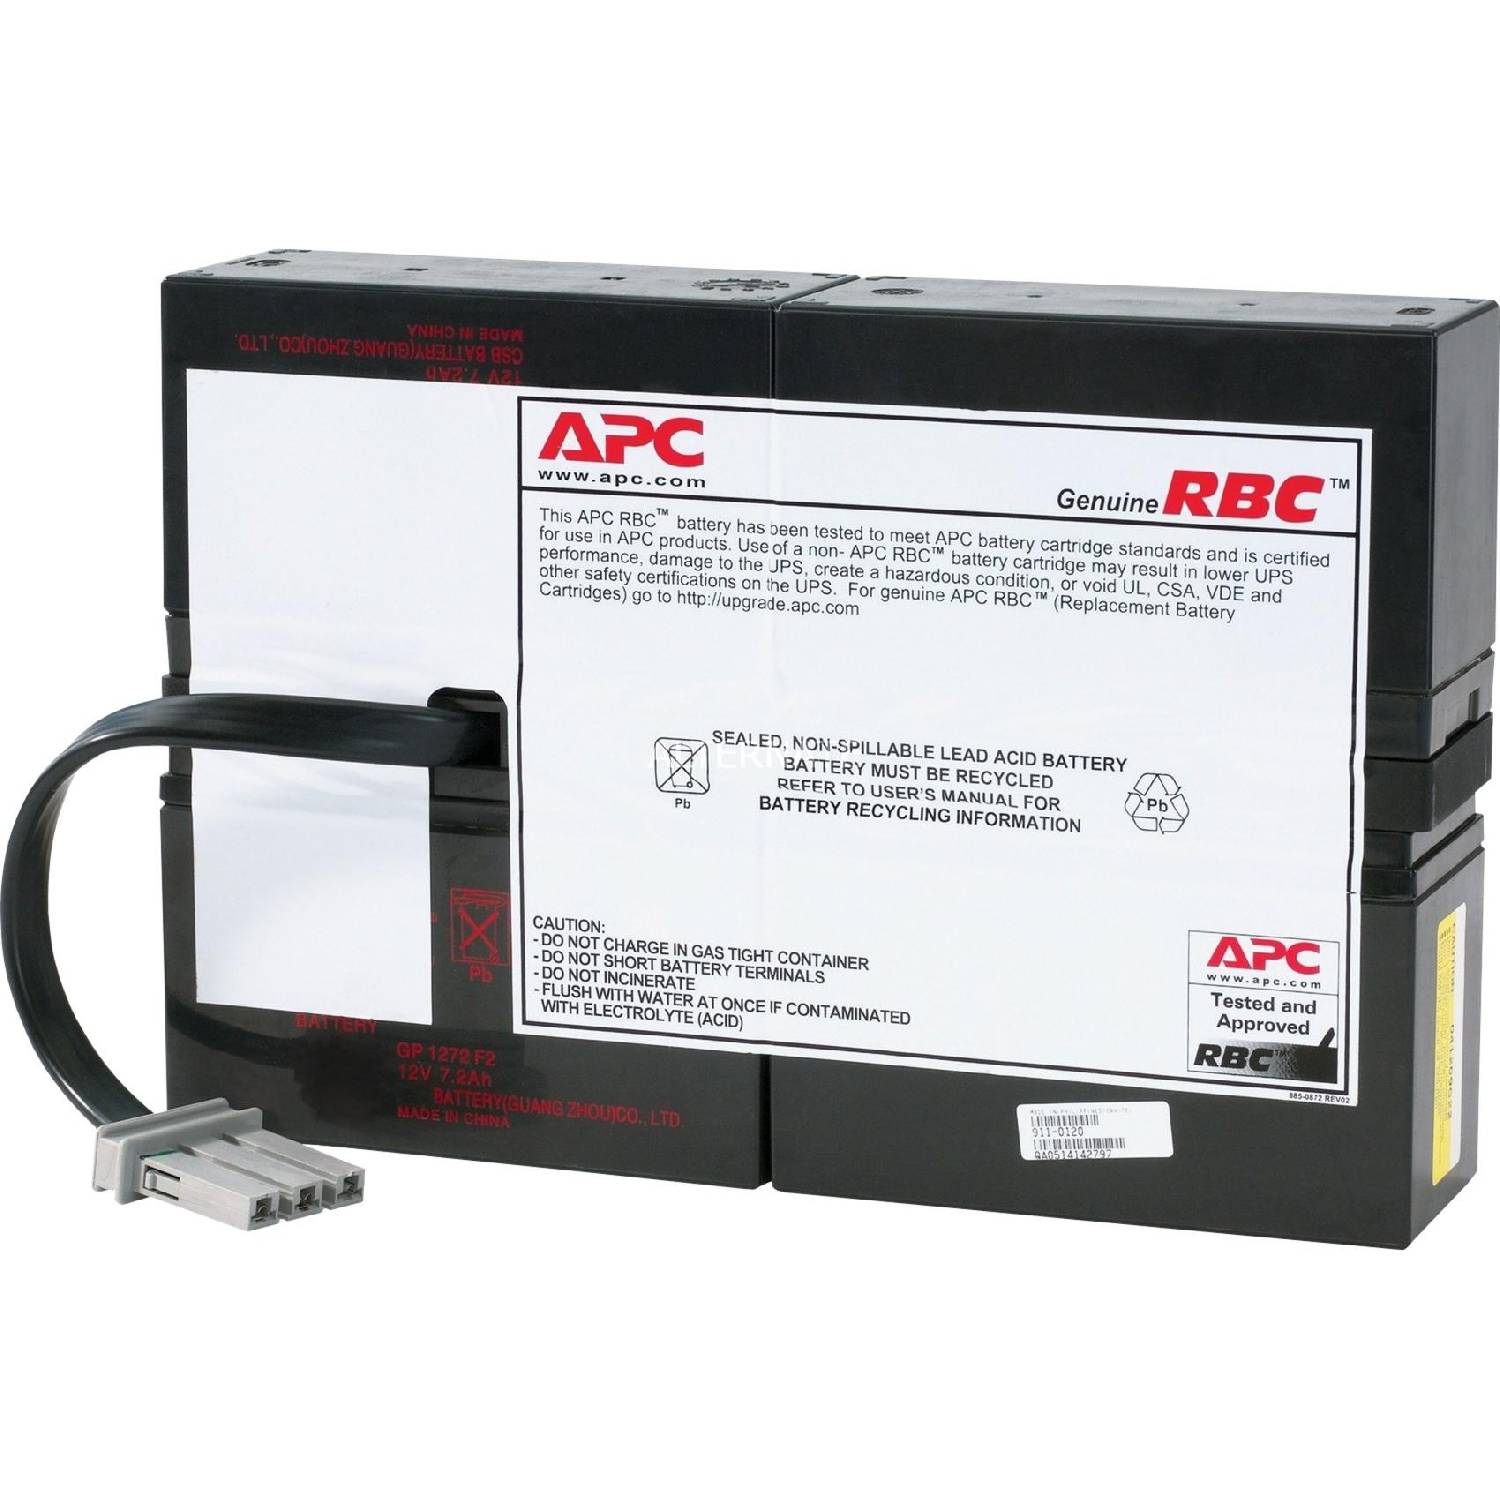 Apc ups battery. Аккумуляторная батарея APC rbc59. Аккумуляторные батареи для ИБП APC. APC sc1500. APC Smart ups 1500 батарея.